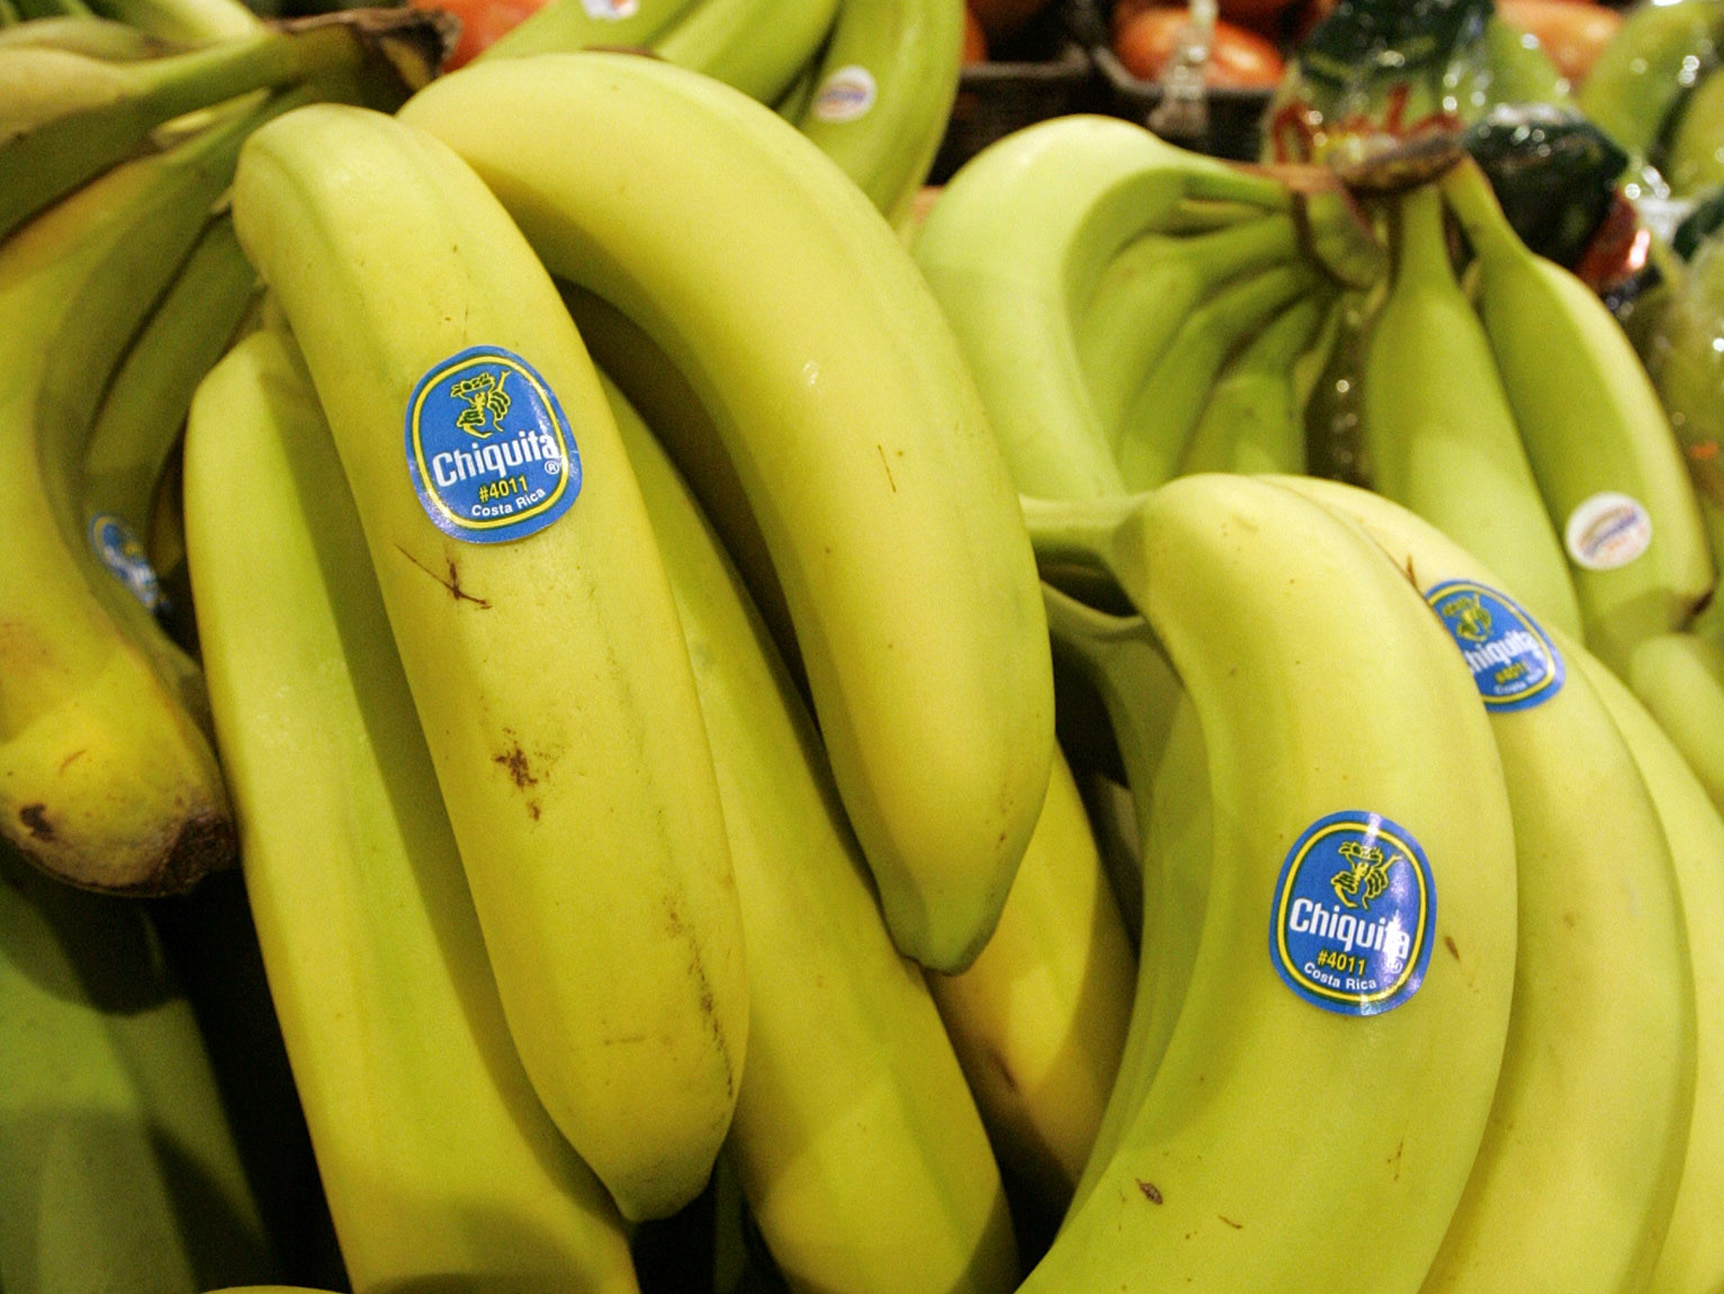 Bananas: An uncertain future for America’s favorite fruit